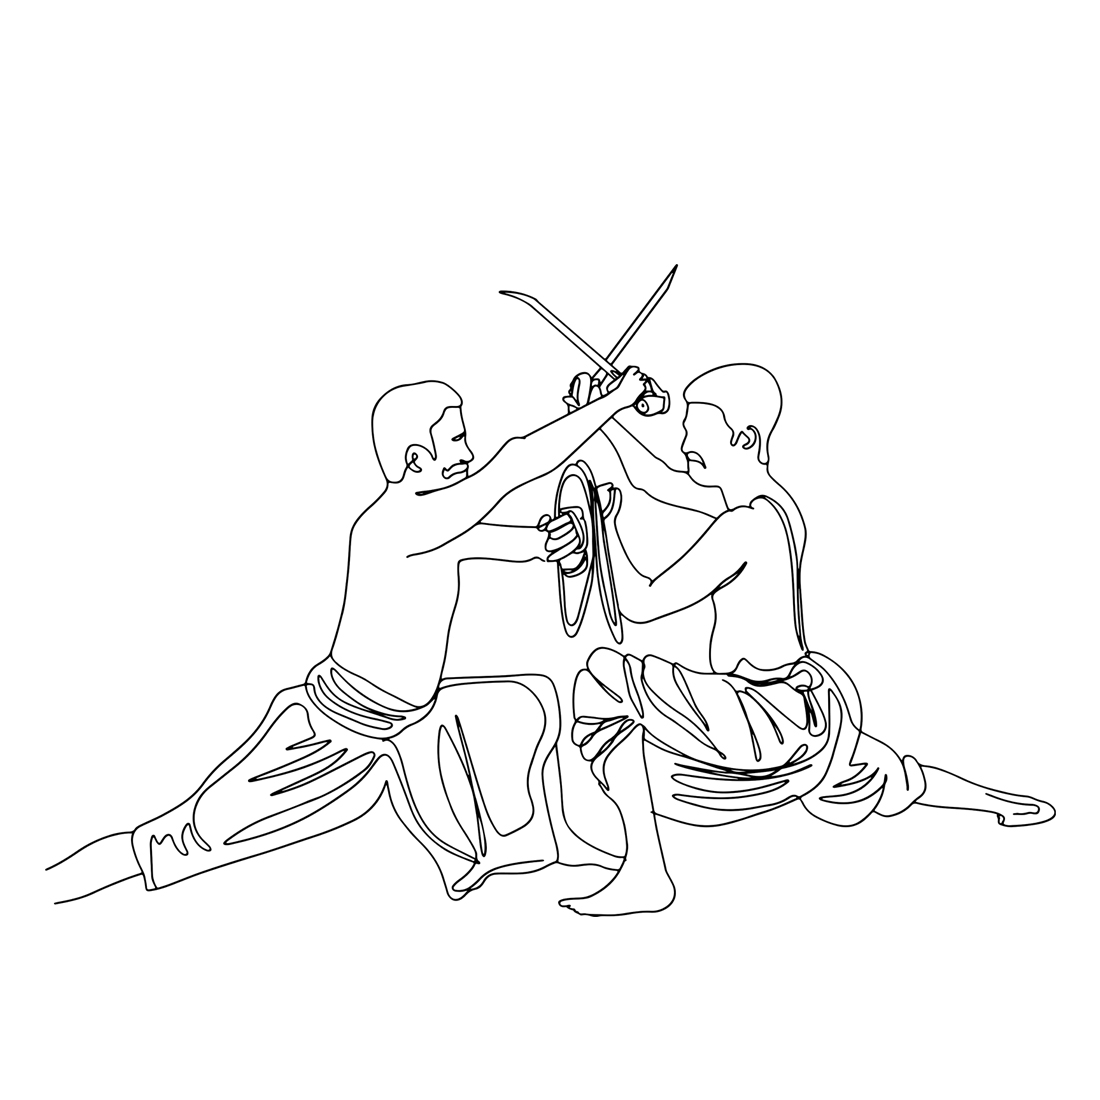 Indian Martial Arts Cartoon: Kalarippayat Warriors in One Line, Epic Battle Scene: Kalarippayat Swords and Shields Illustration, Kalarippayat Warriors Sketch preview image.